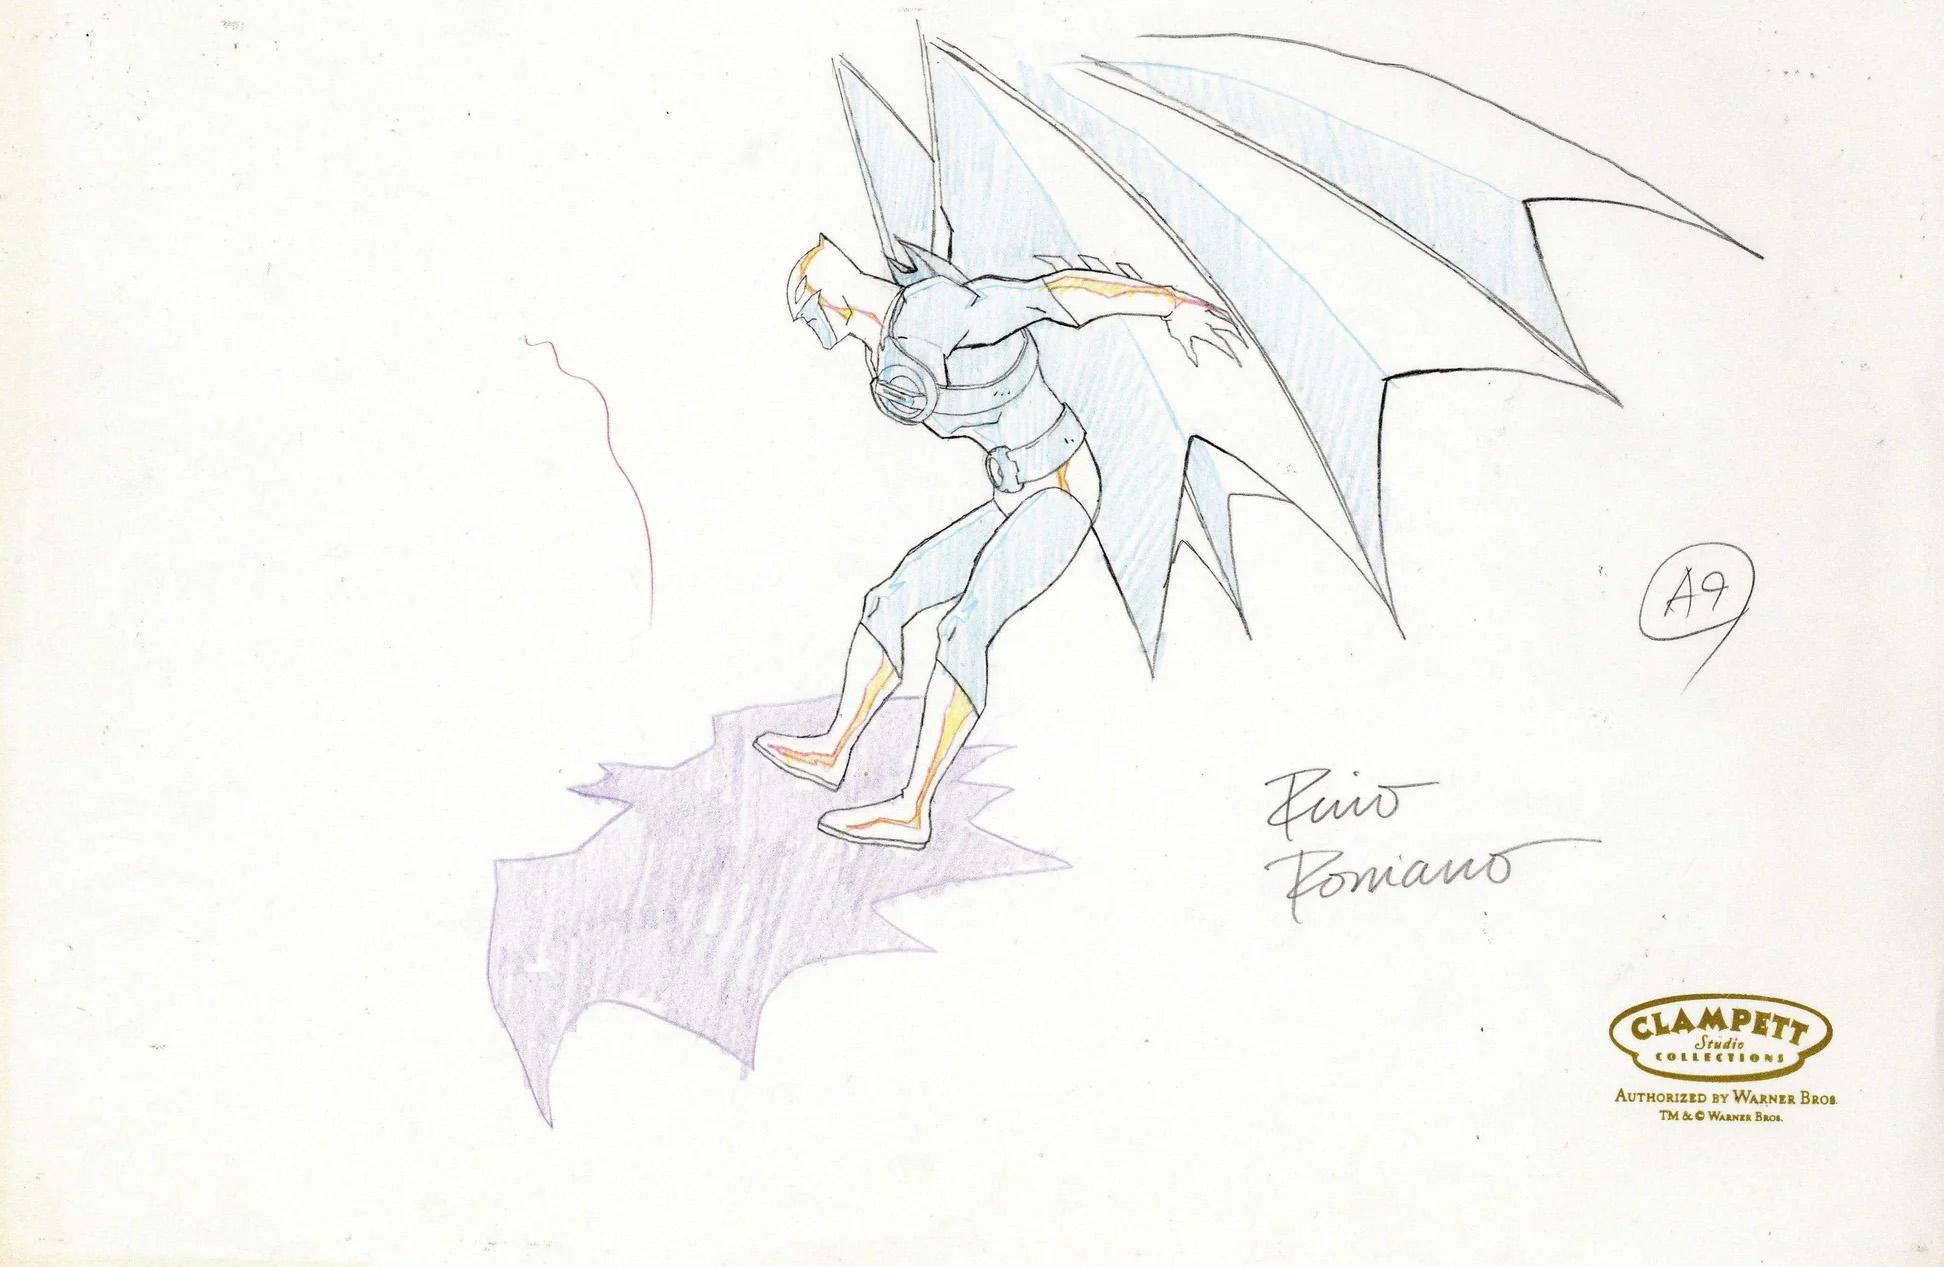 The Batman Original Production Drawing signed by Rino Romano: Batman - Art by DC Comics Studio Artists